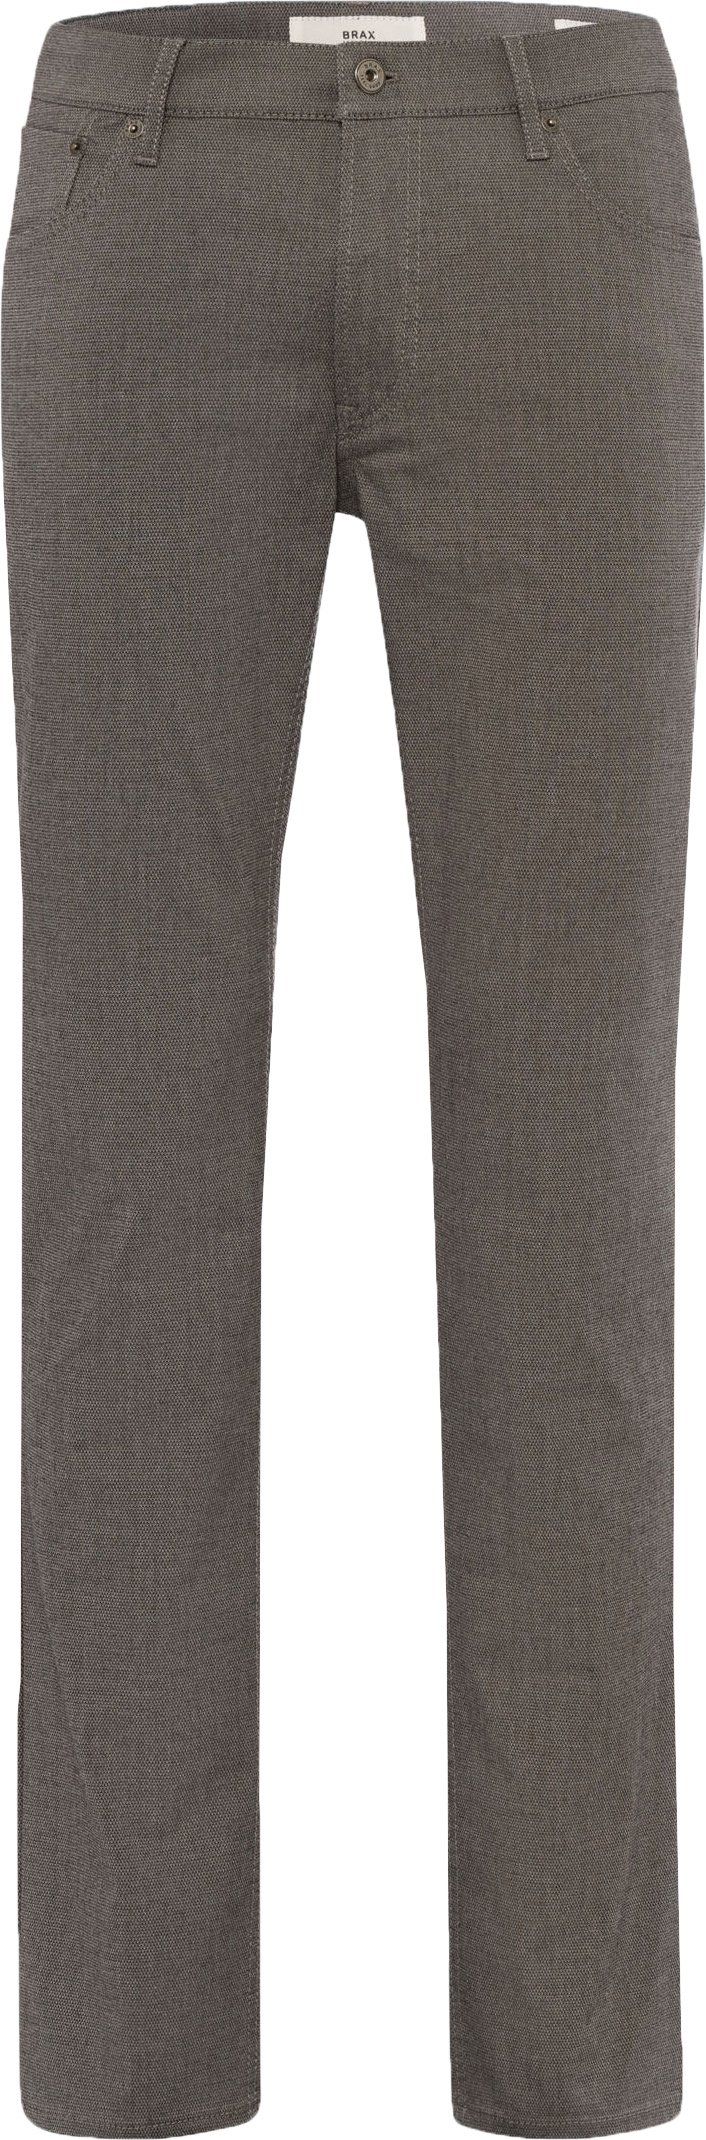 Brax Chuck Hi Flex Jeans Gray Grey size W 31